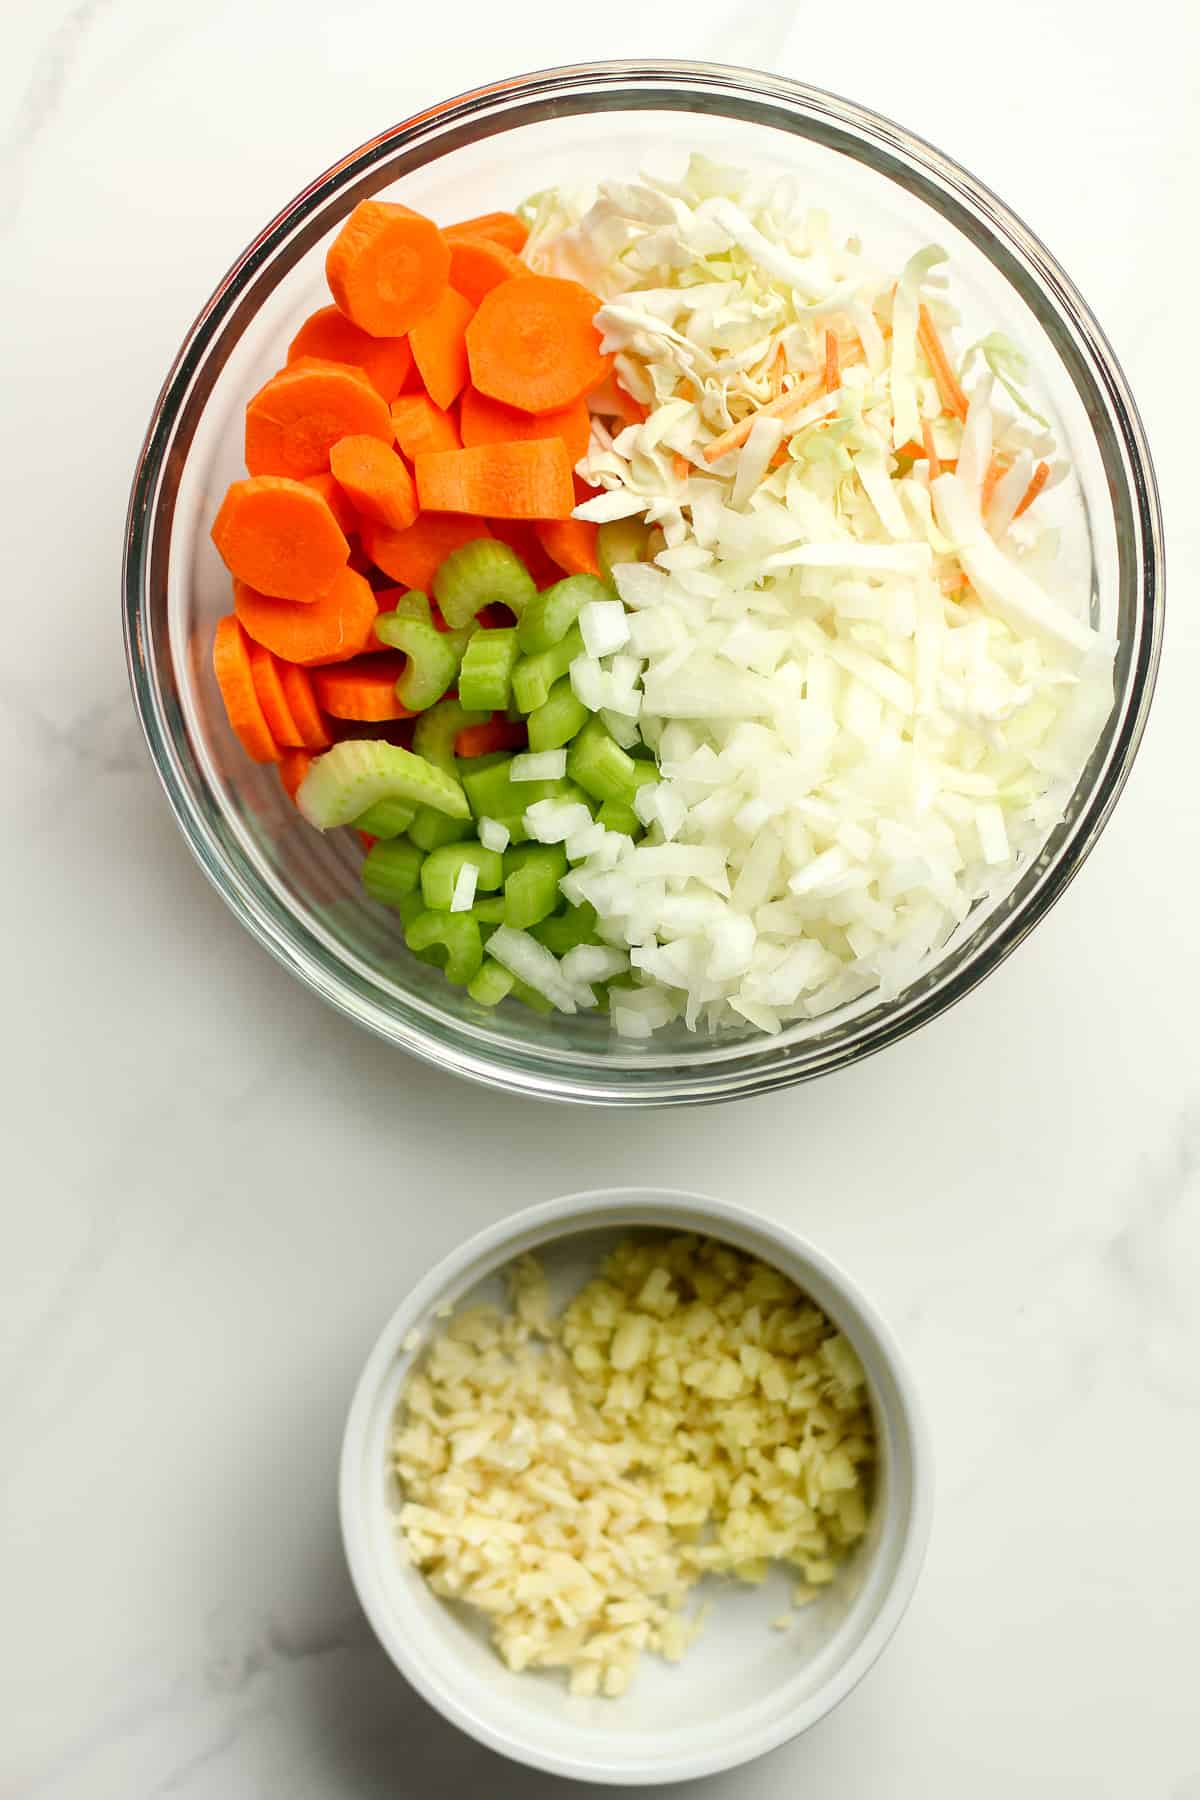 Bowls of chopped veggies.